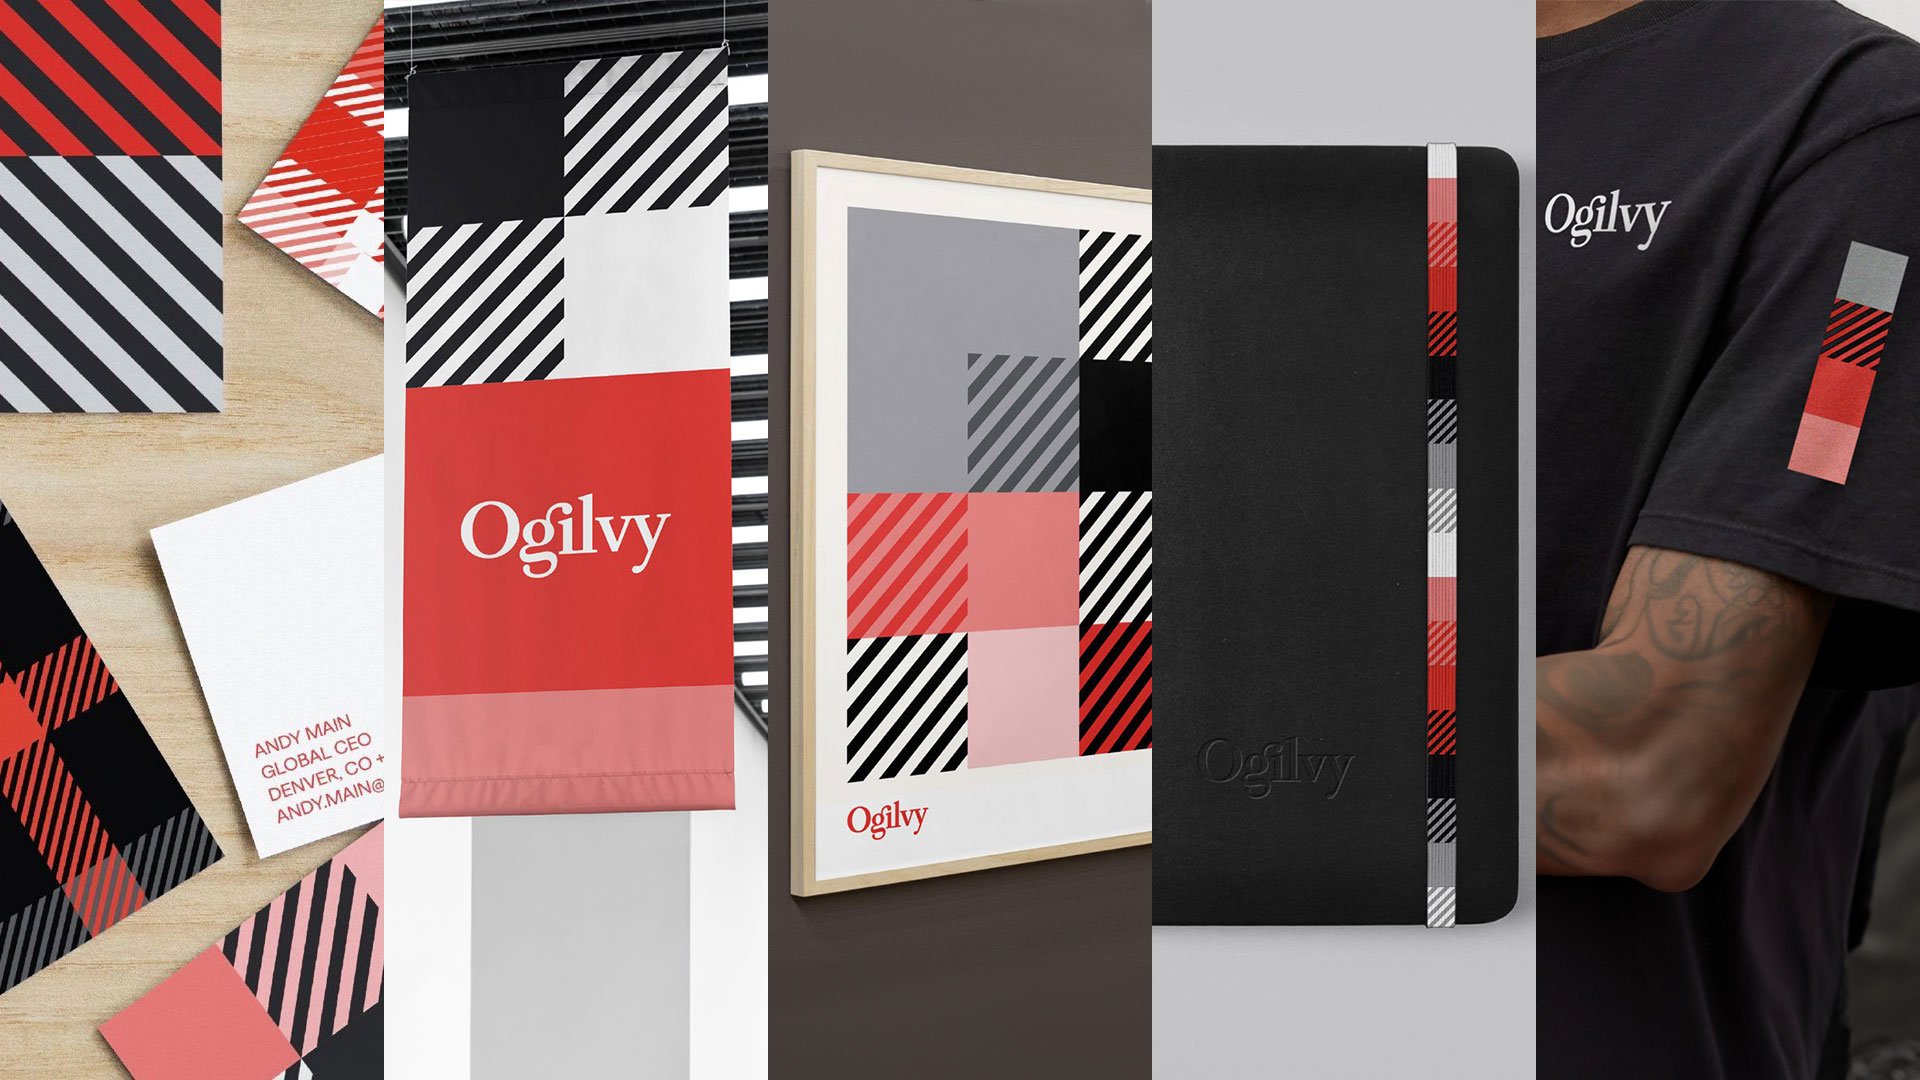 Quentin-Ogilvy-identity-2.jpg